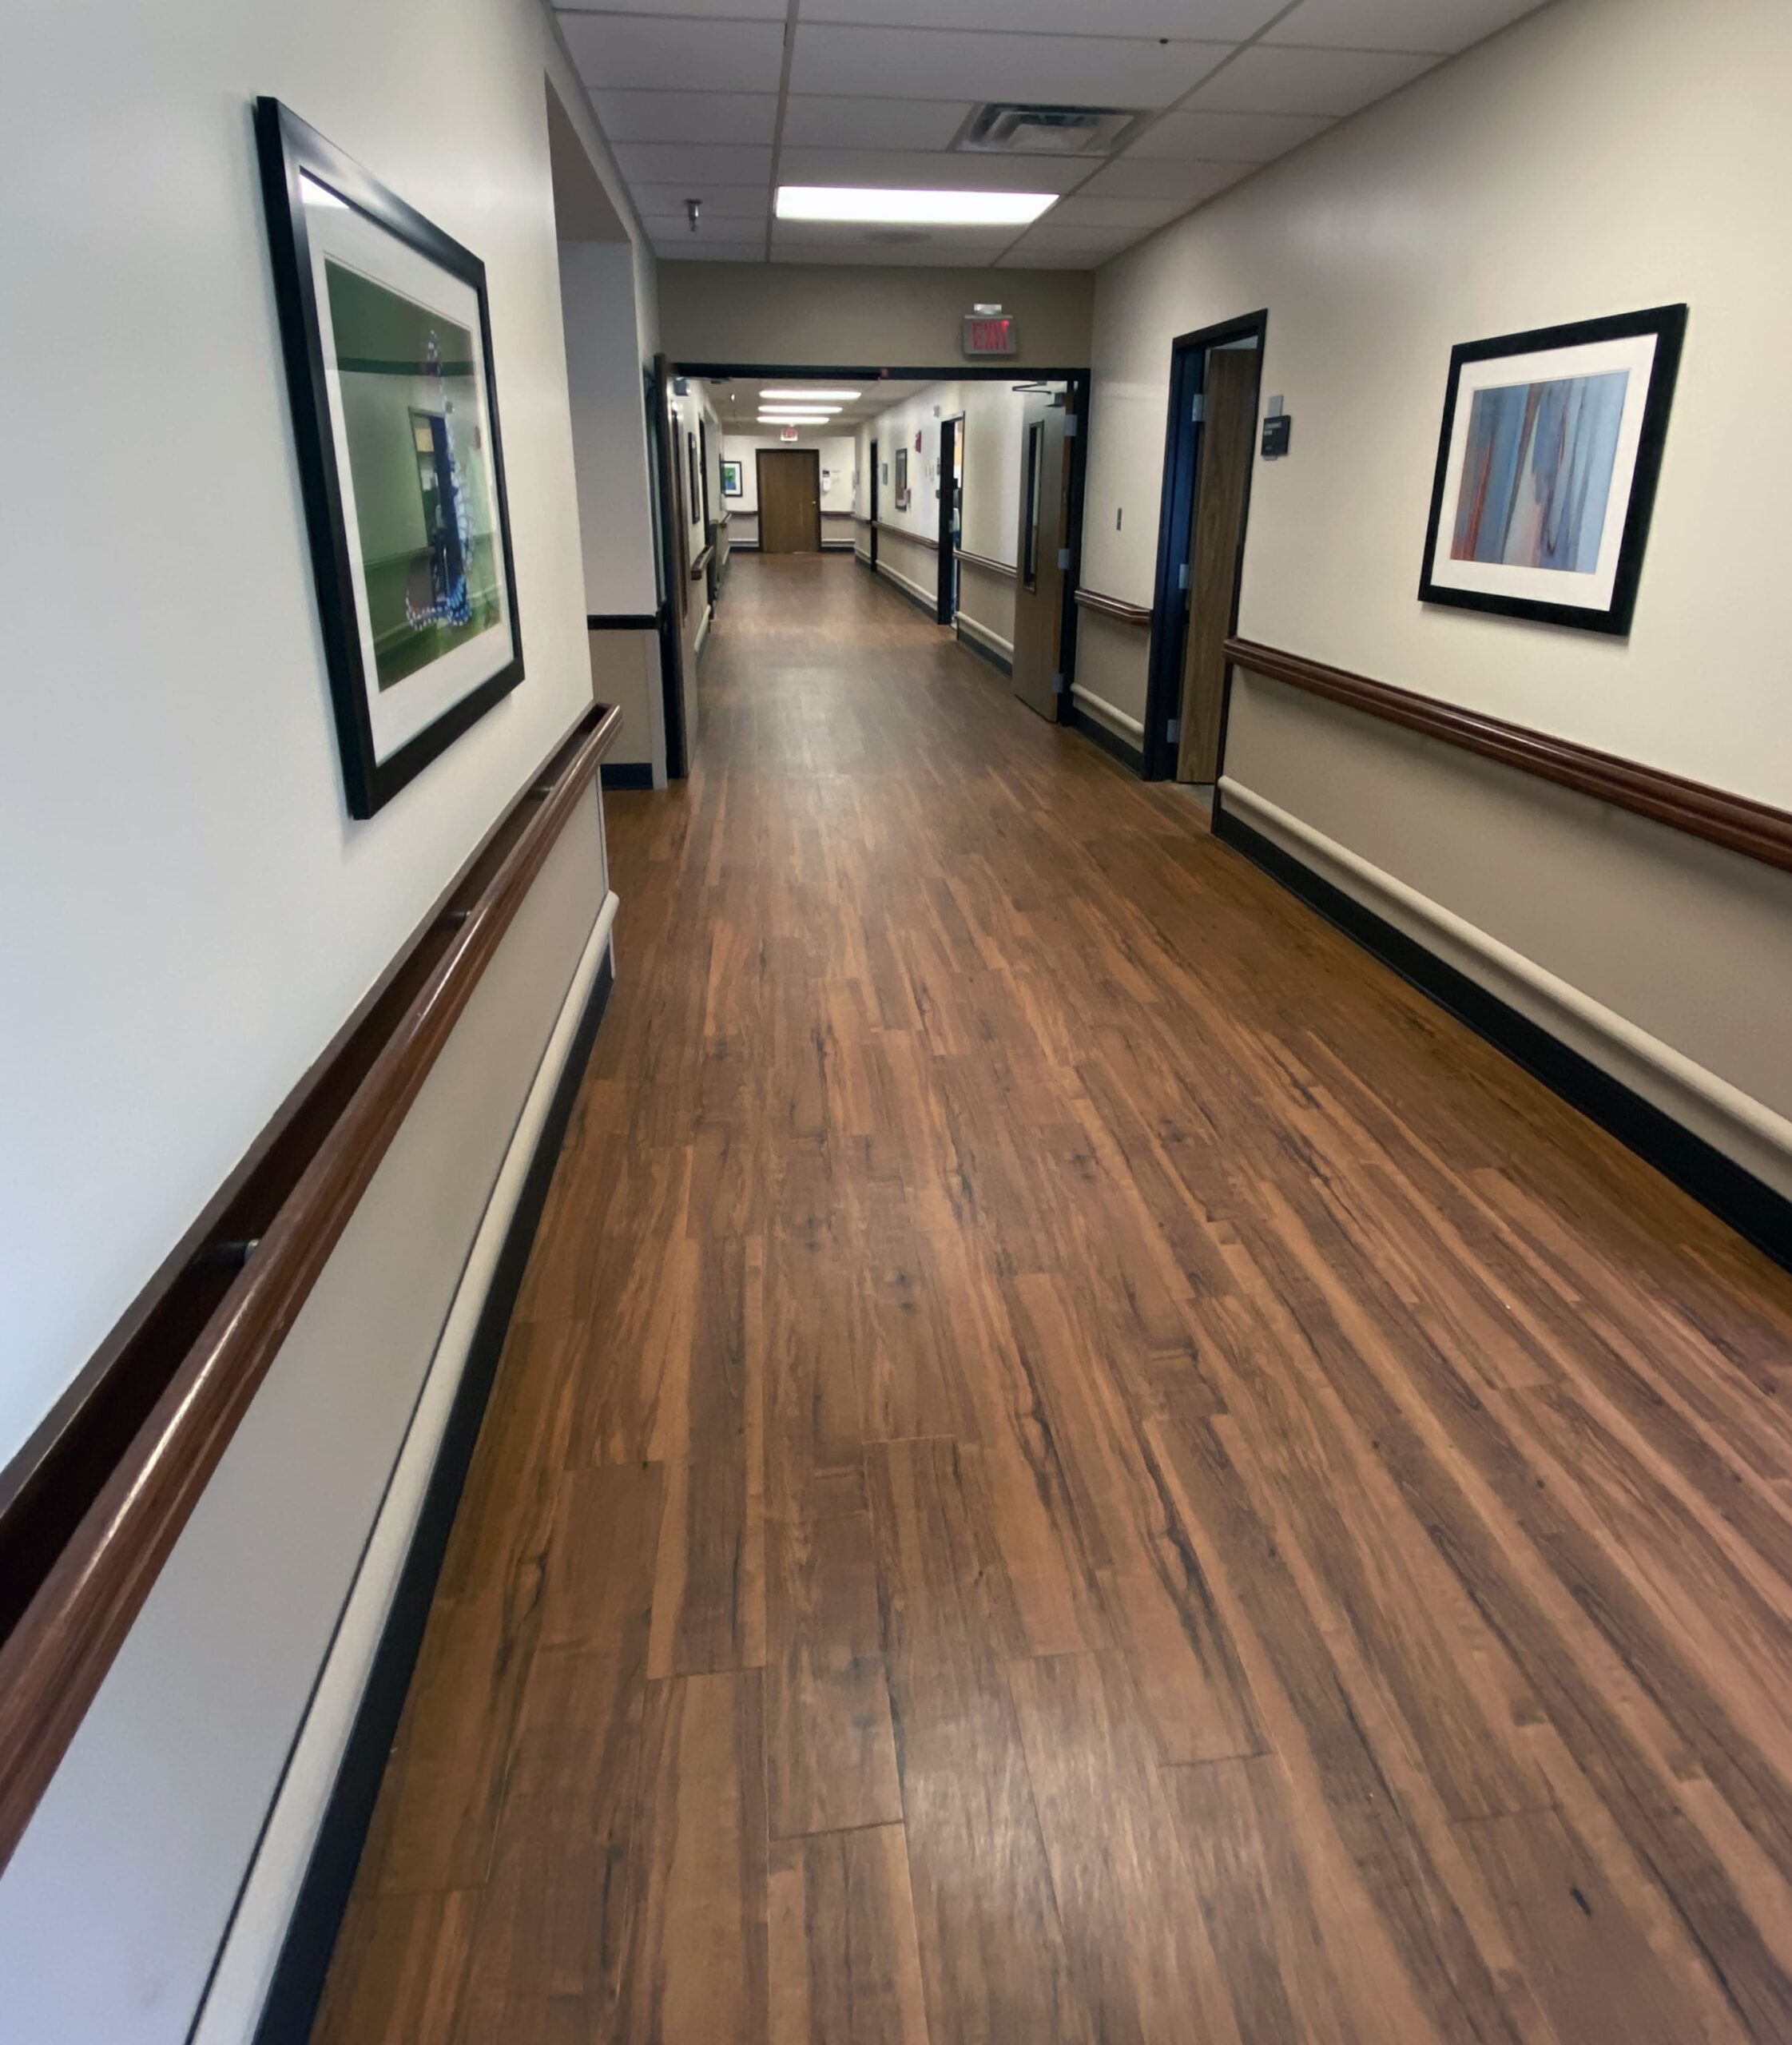 Brickyard Healthcare Woodlands Care Center interior hallway